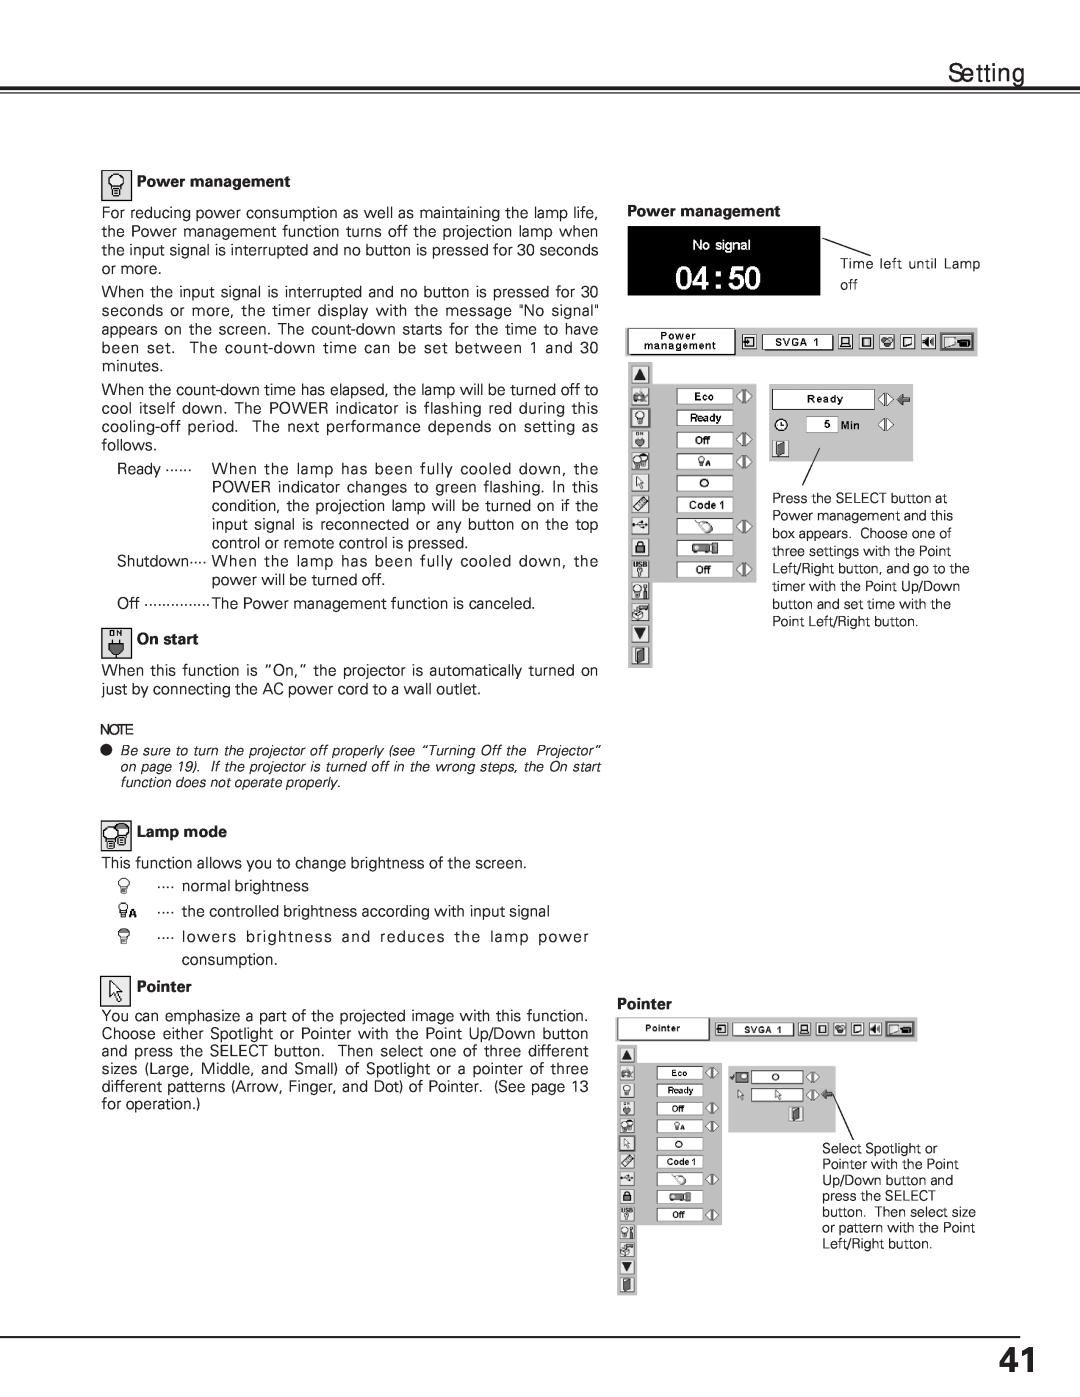 Eiki LC-XE10 instruction manual Setting, Power management, On start, Lamp mode, Pointer Pointer 